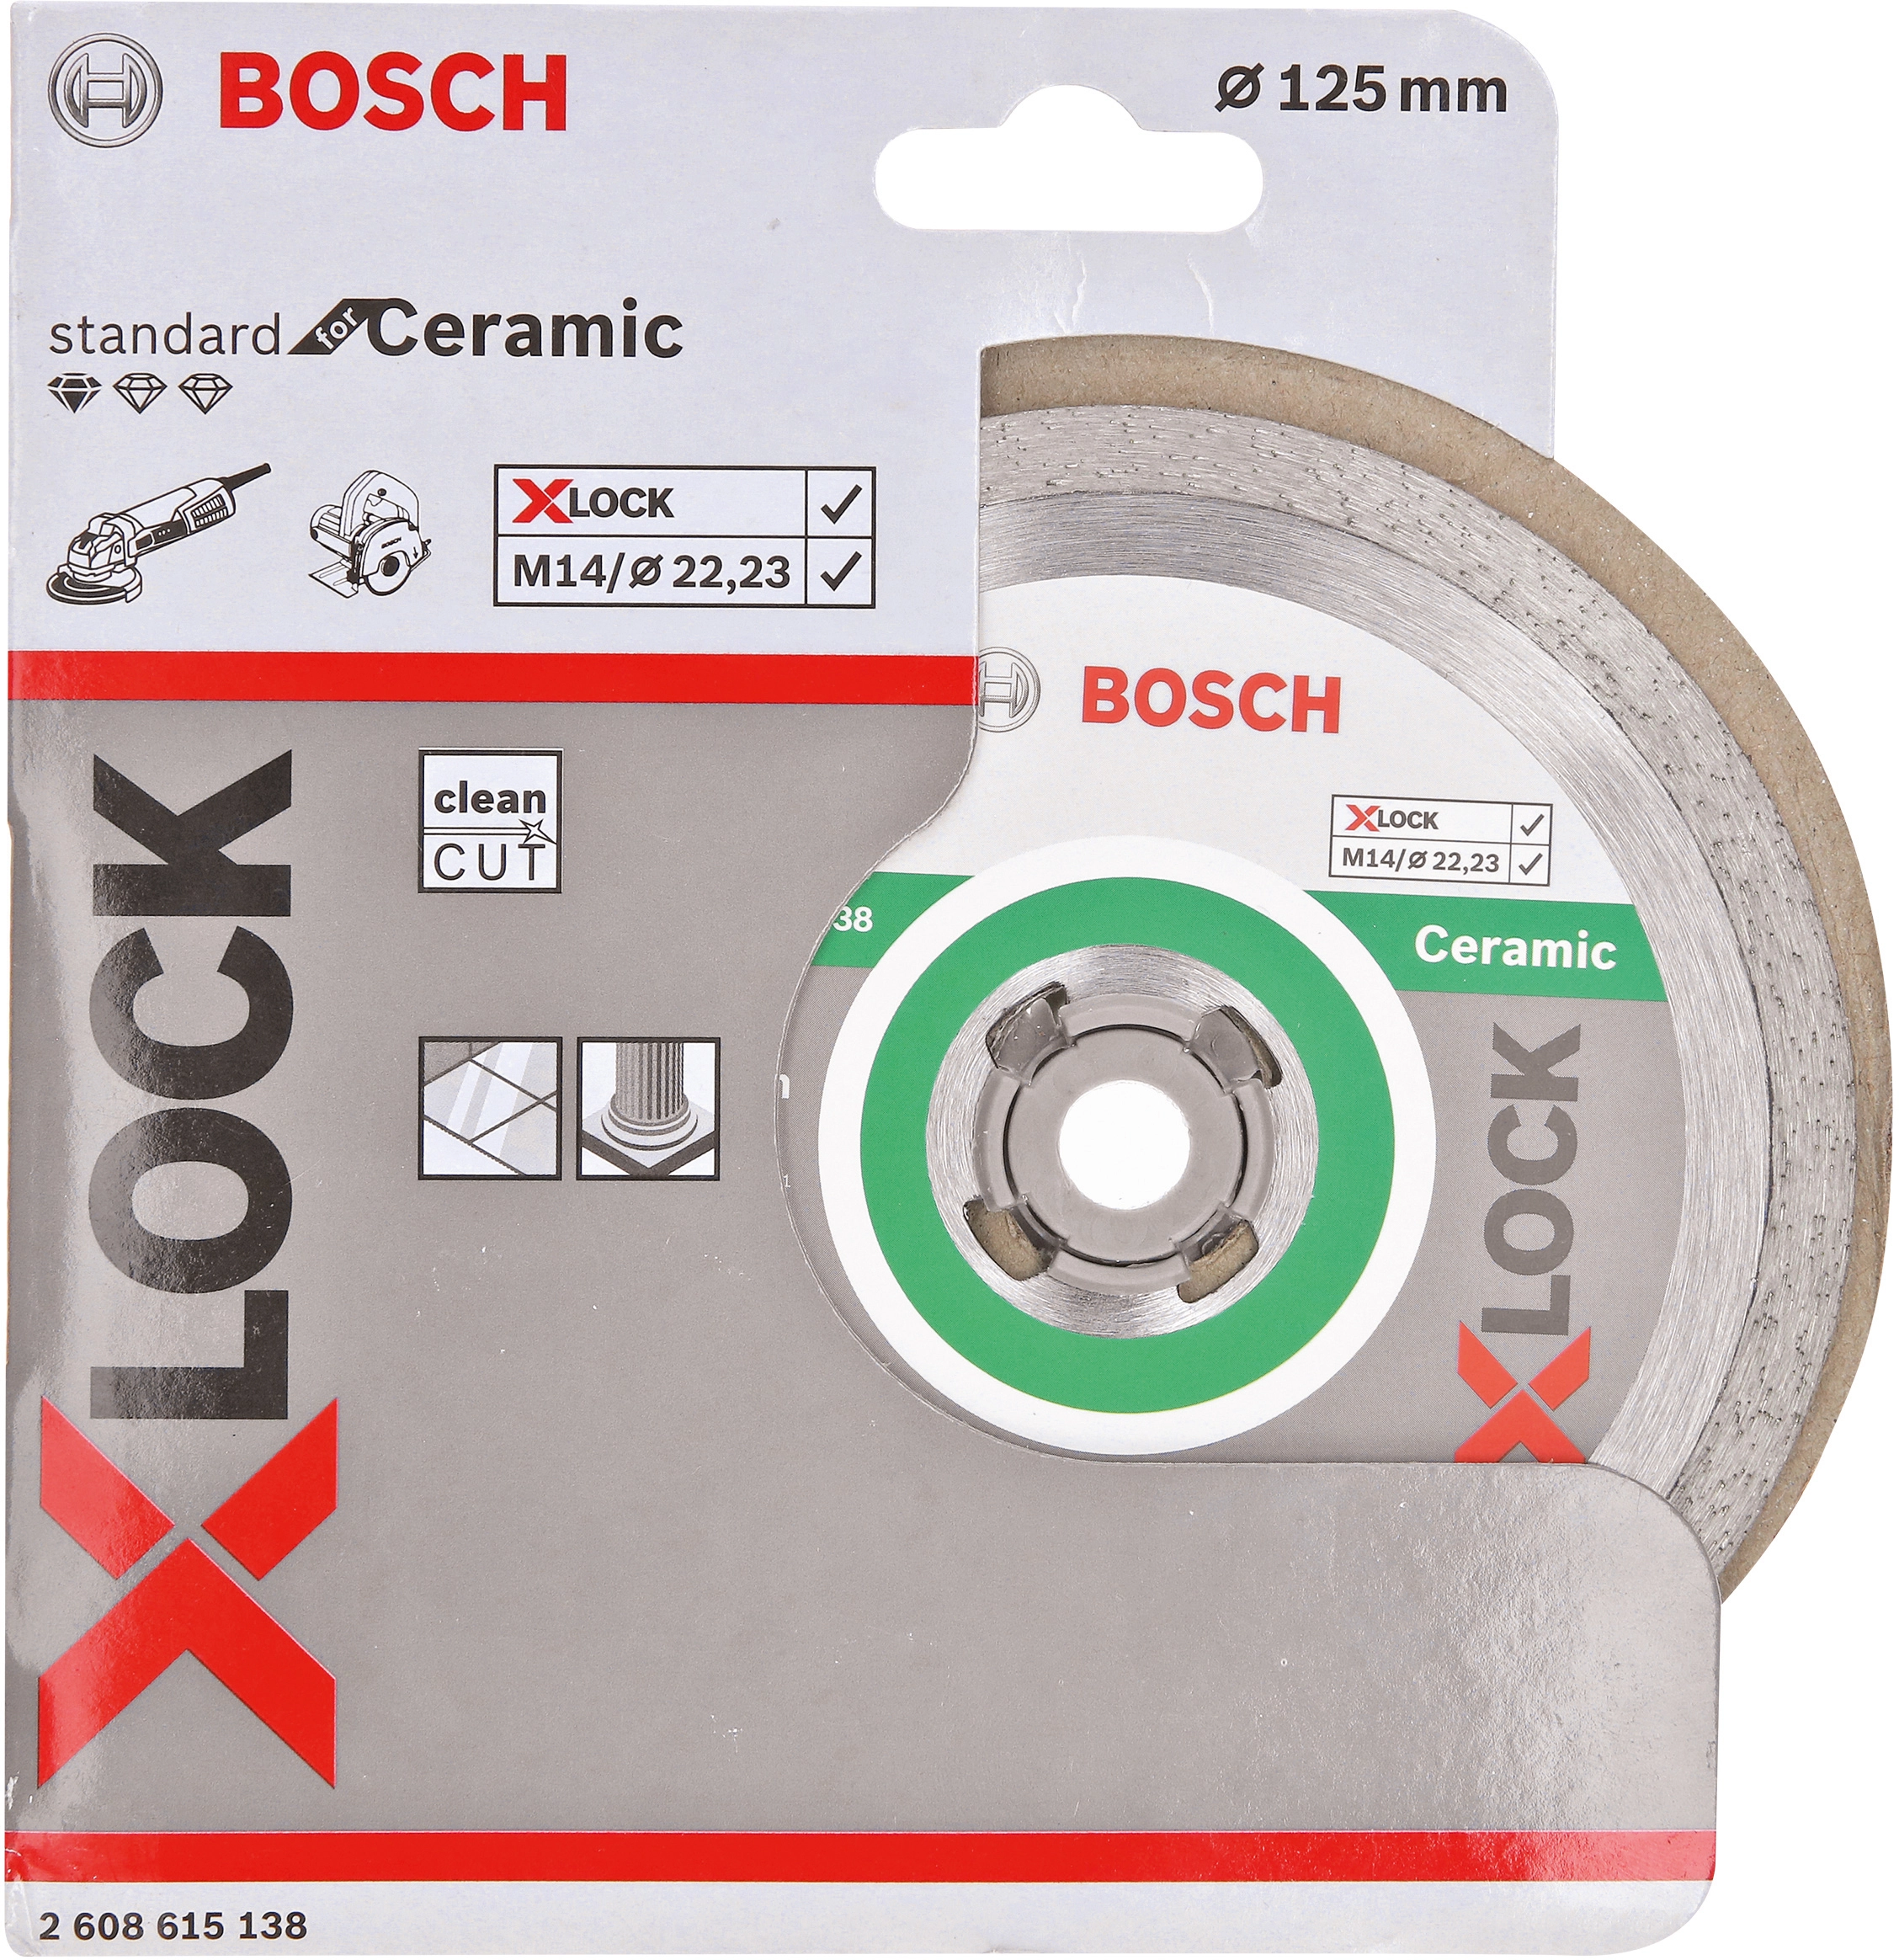 BOSCH Disque diamant X-LOCK 125mm - Standard for Ceramic